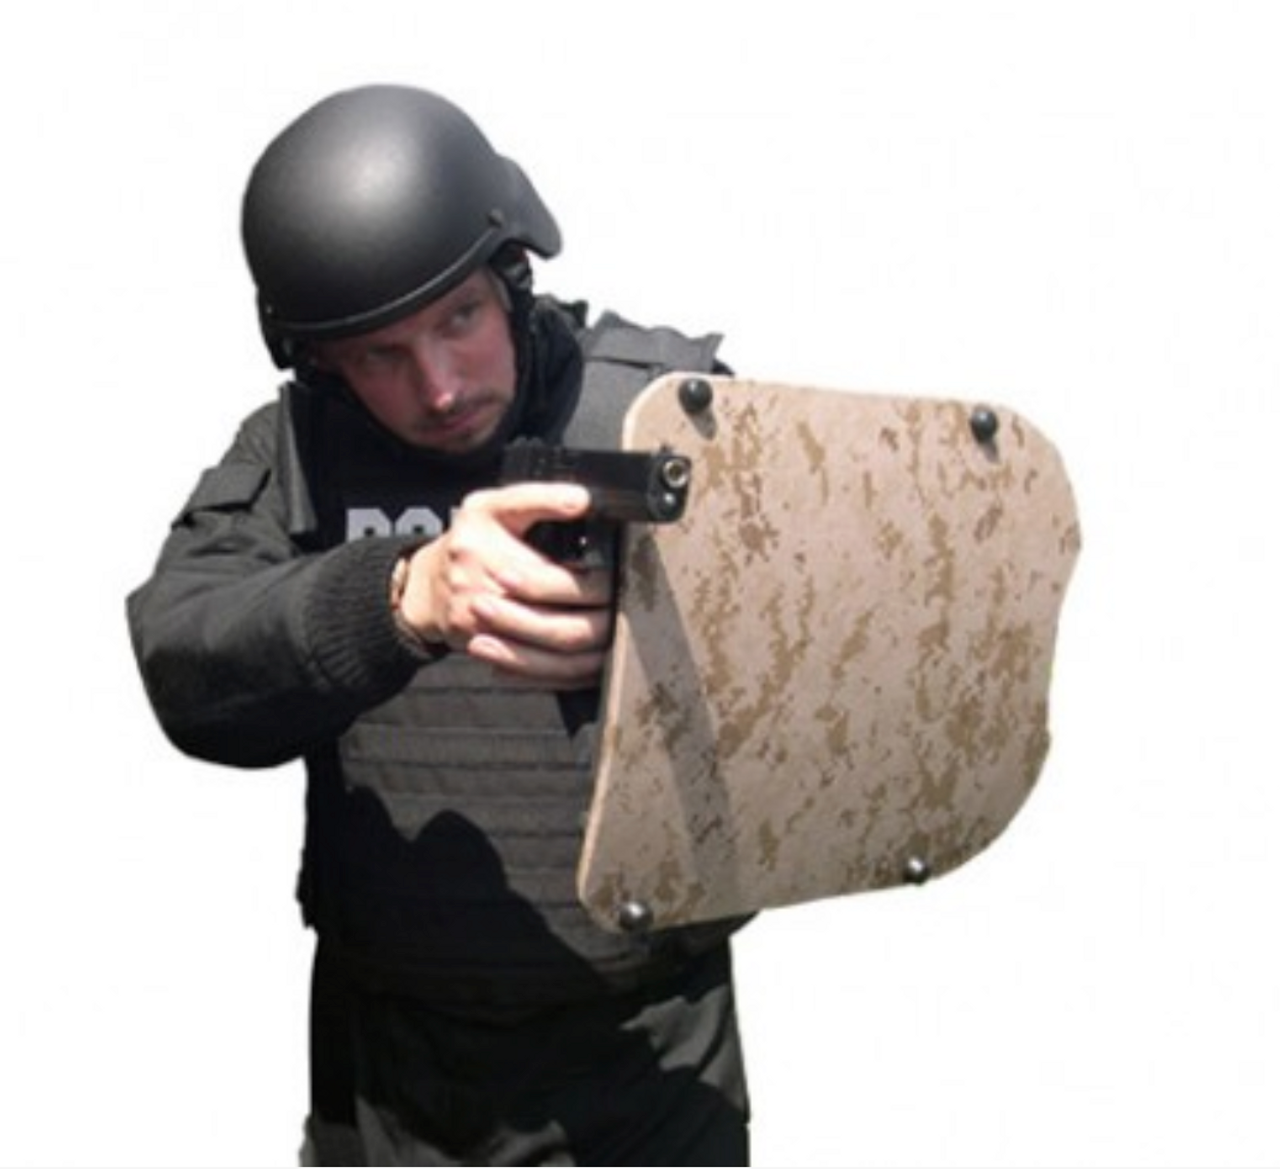 Portable Nij IV Police Military Ballistic Shield Tactical Shield